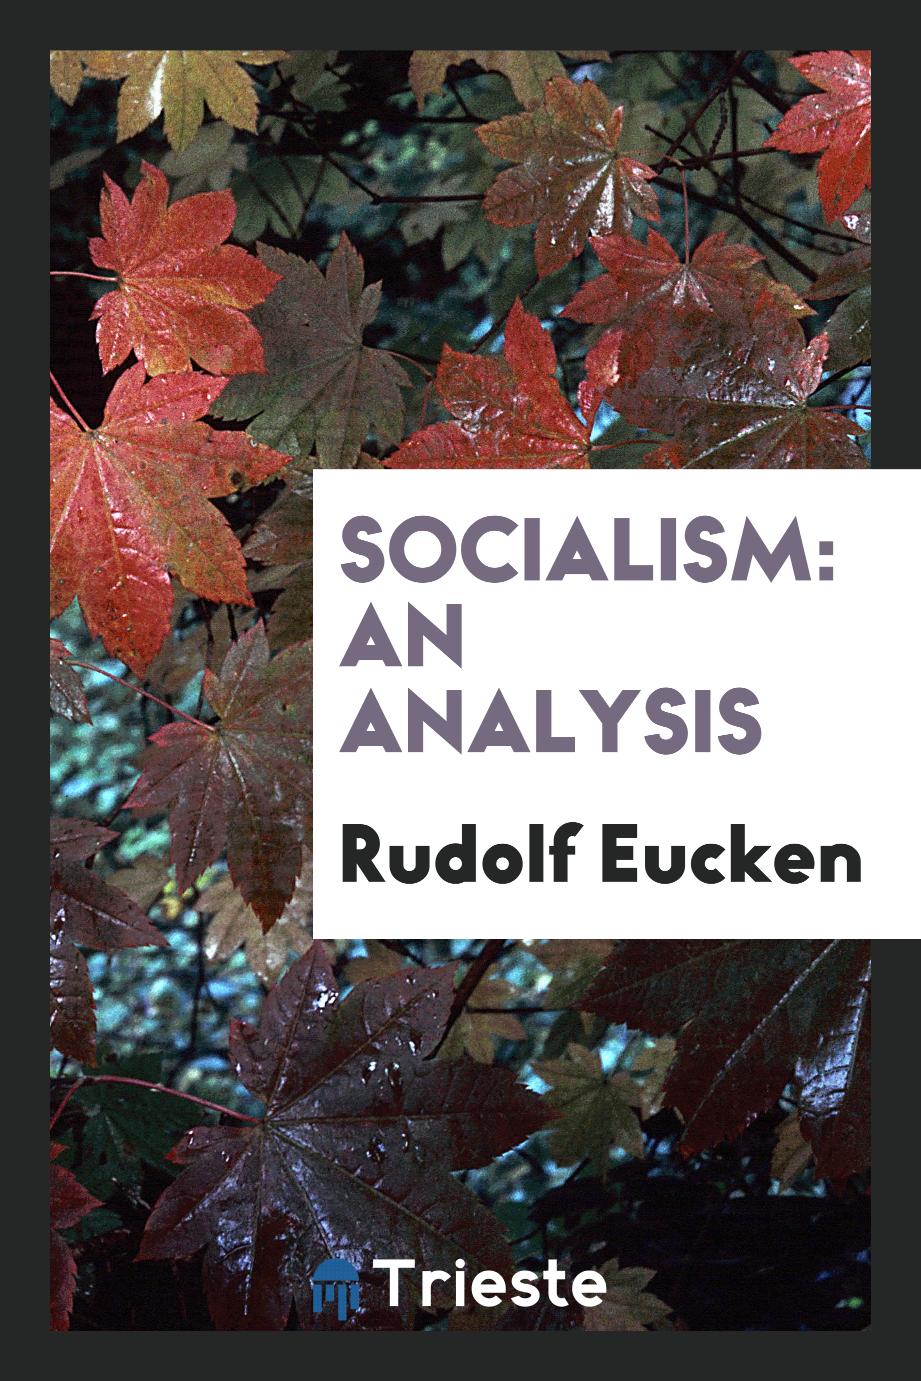 Socialism: an analysis